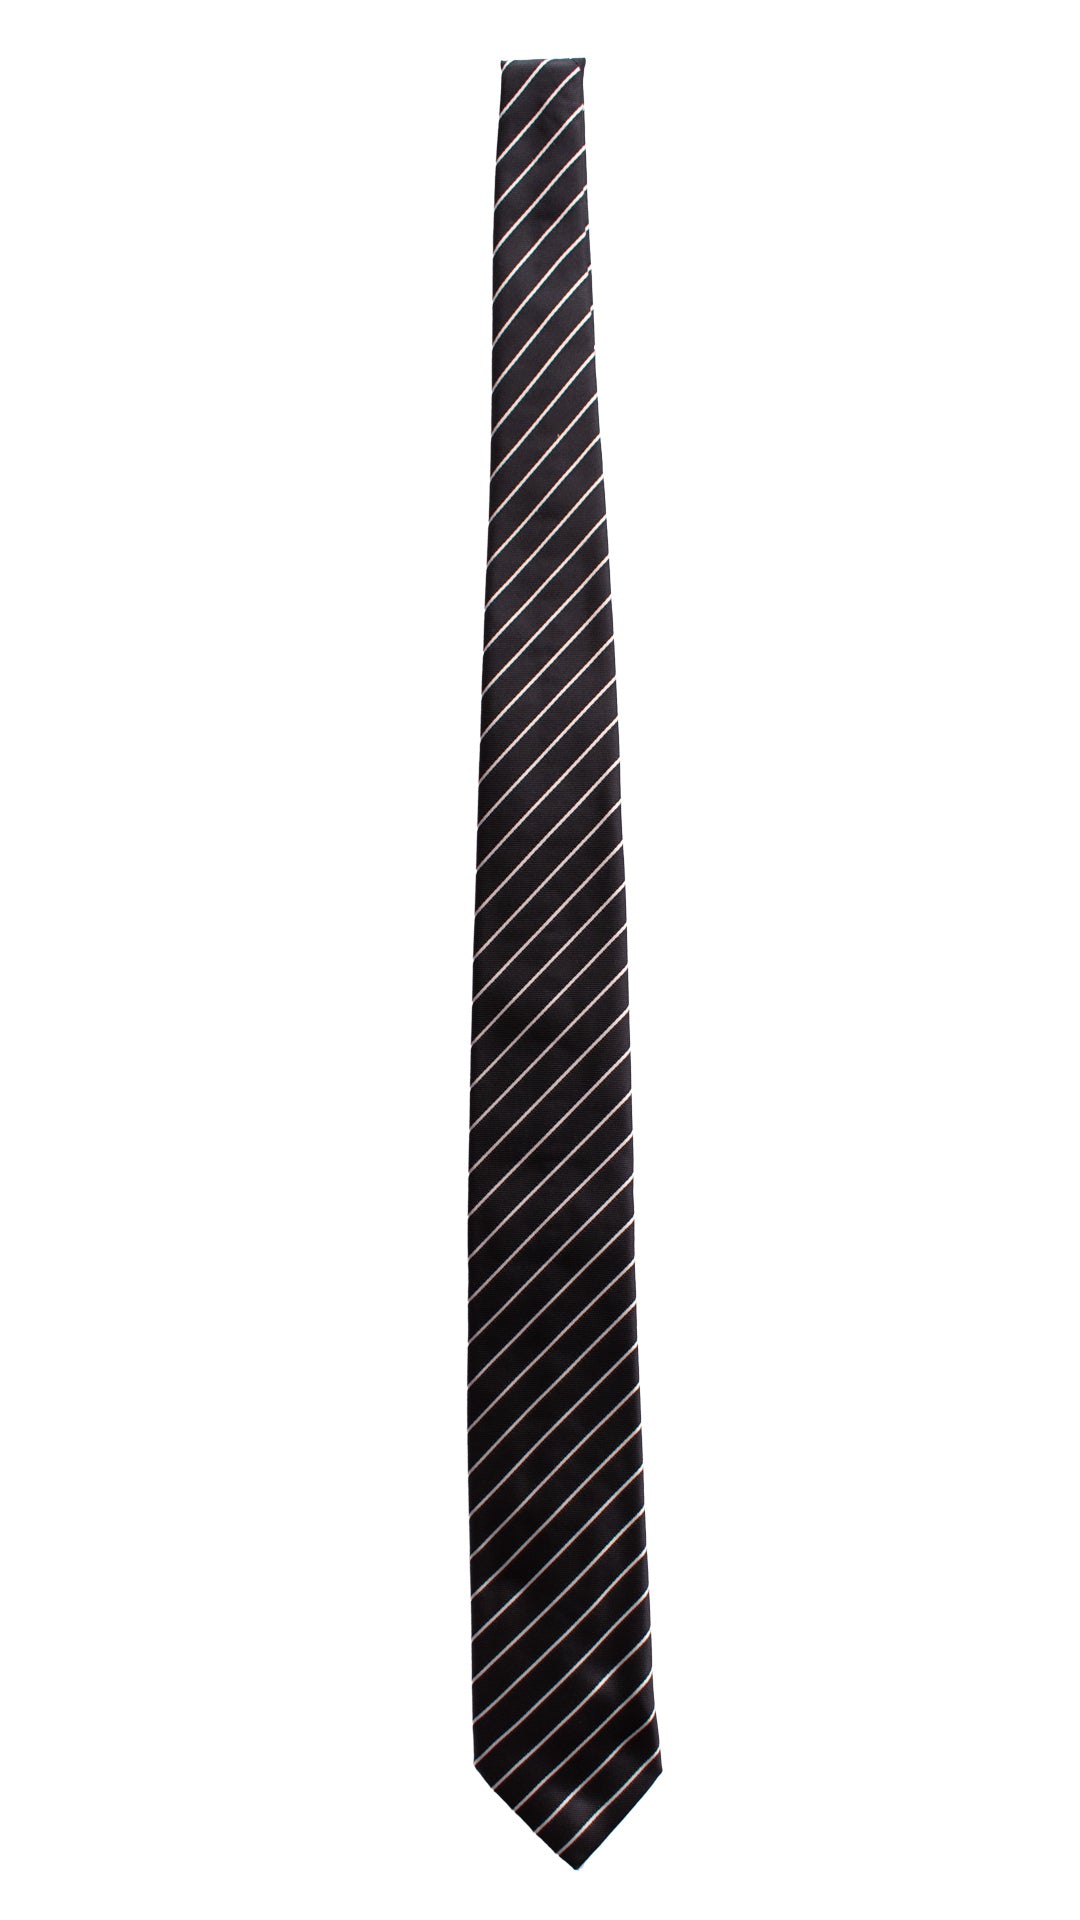 Cravatta Regimental da Cerimonia di Seta Blu con Righe Bianche CY6659 Intera